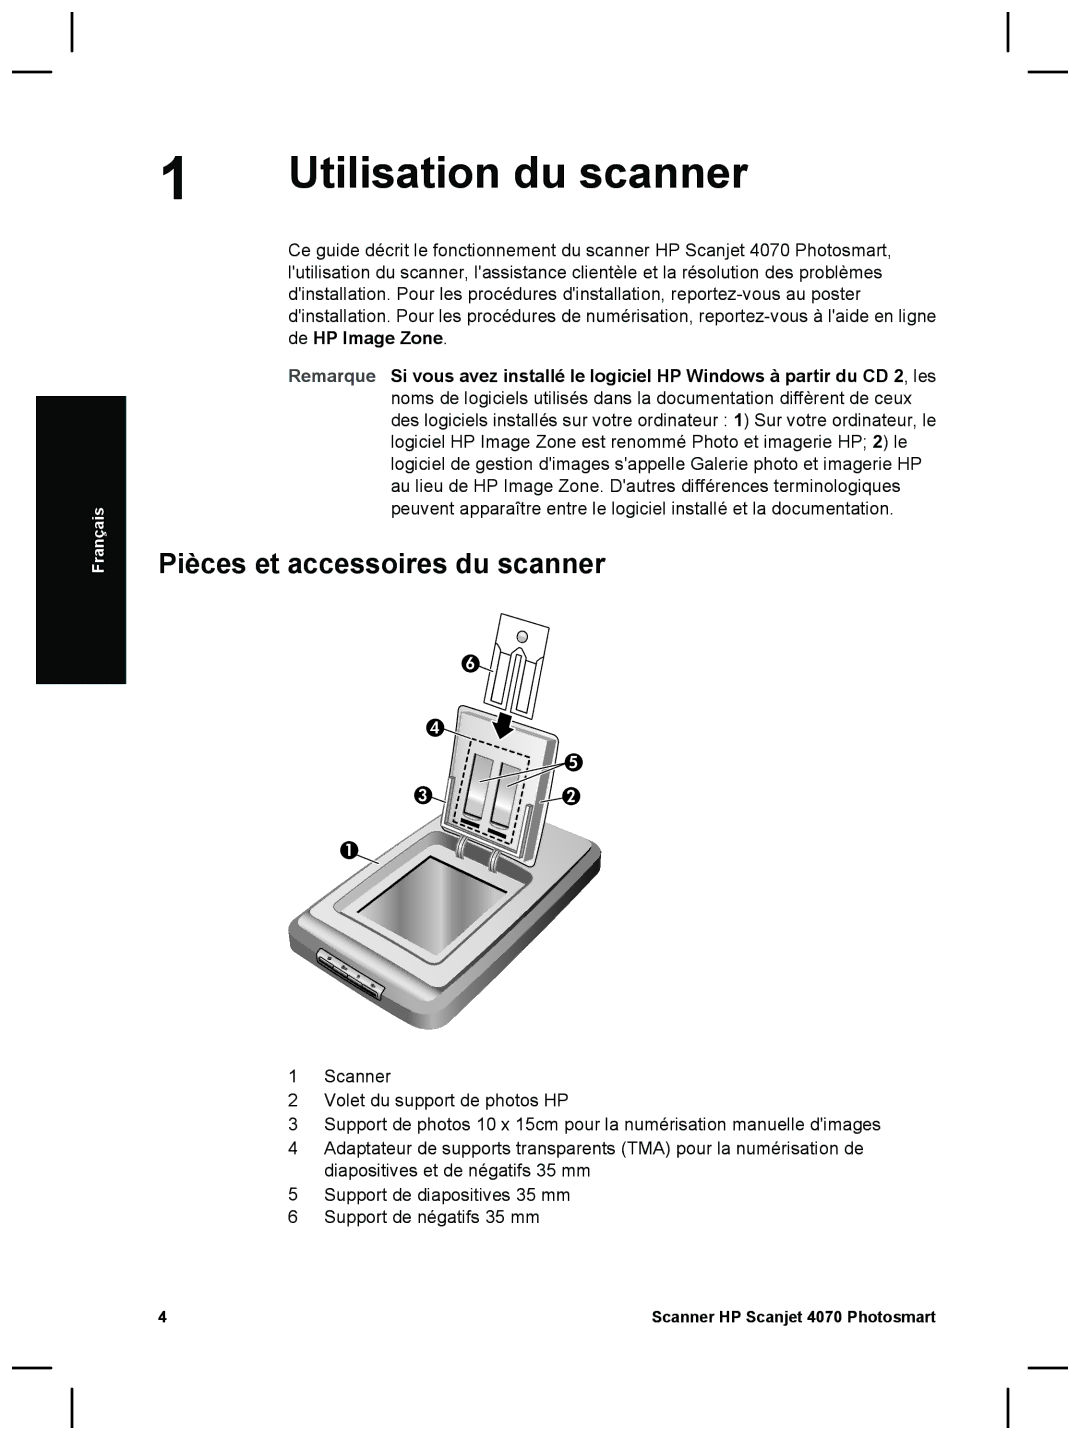 HP 4070 manual Utilisation du scanner, Pièces et accessoires du scanner 